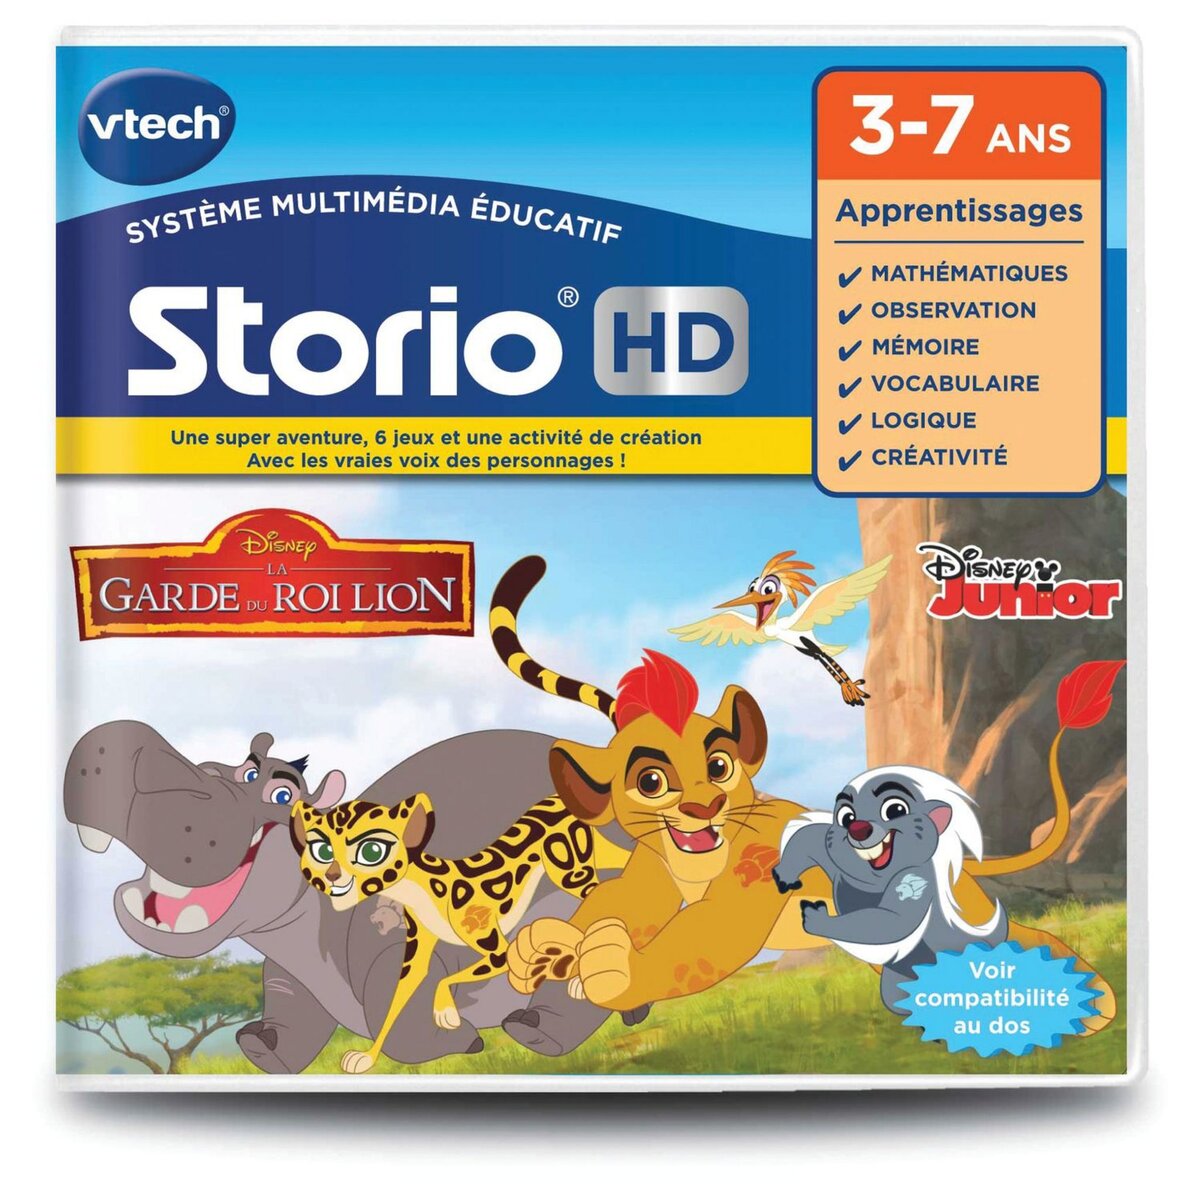 VTECH Jeu Storio HD - La Garde du Roi Lion Disney